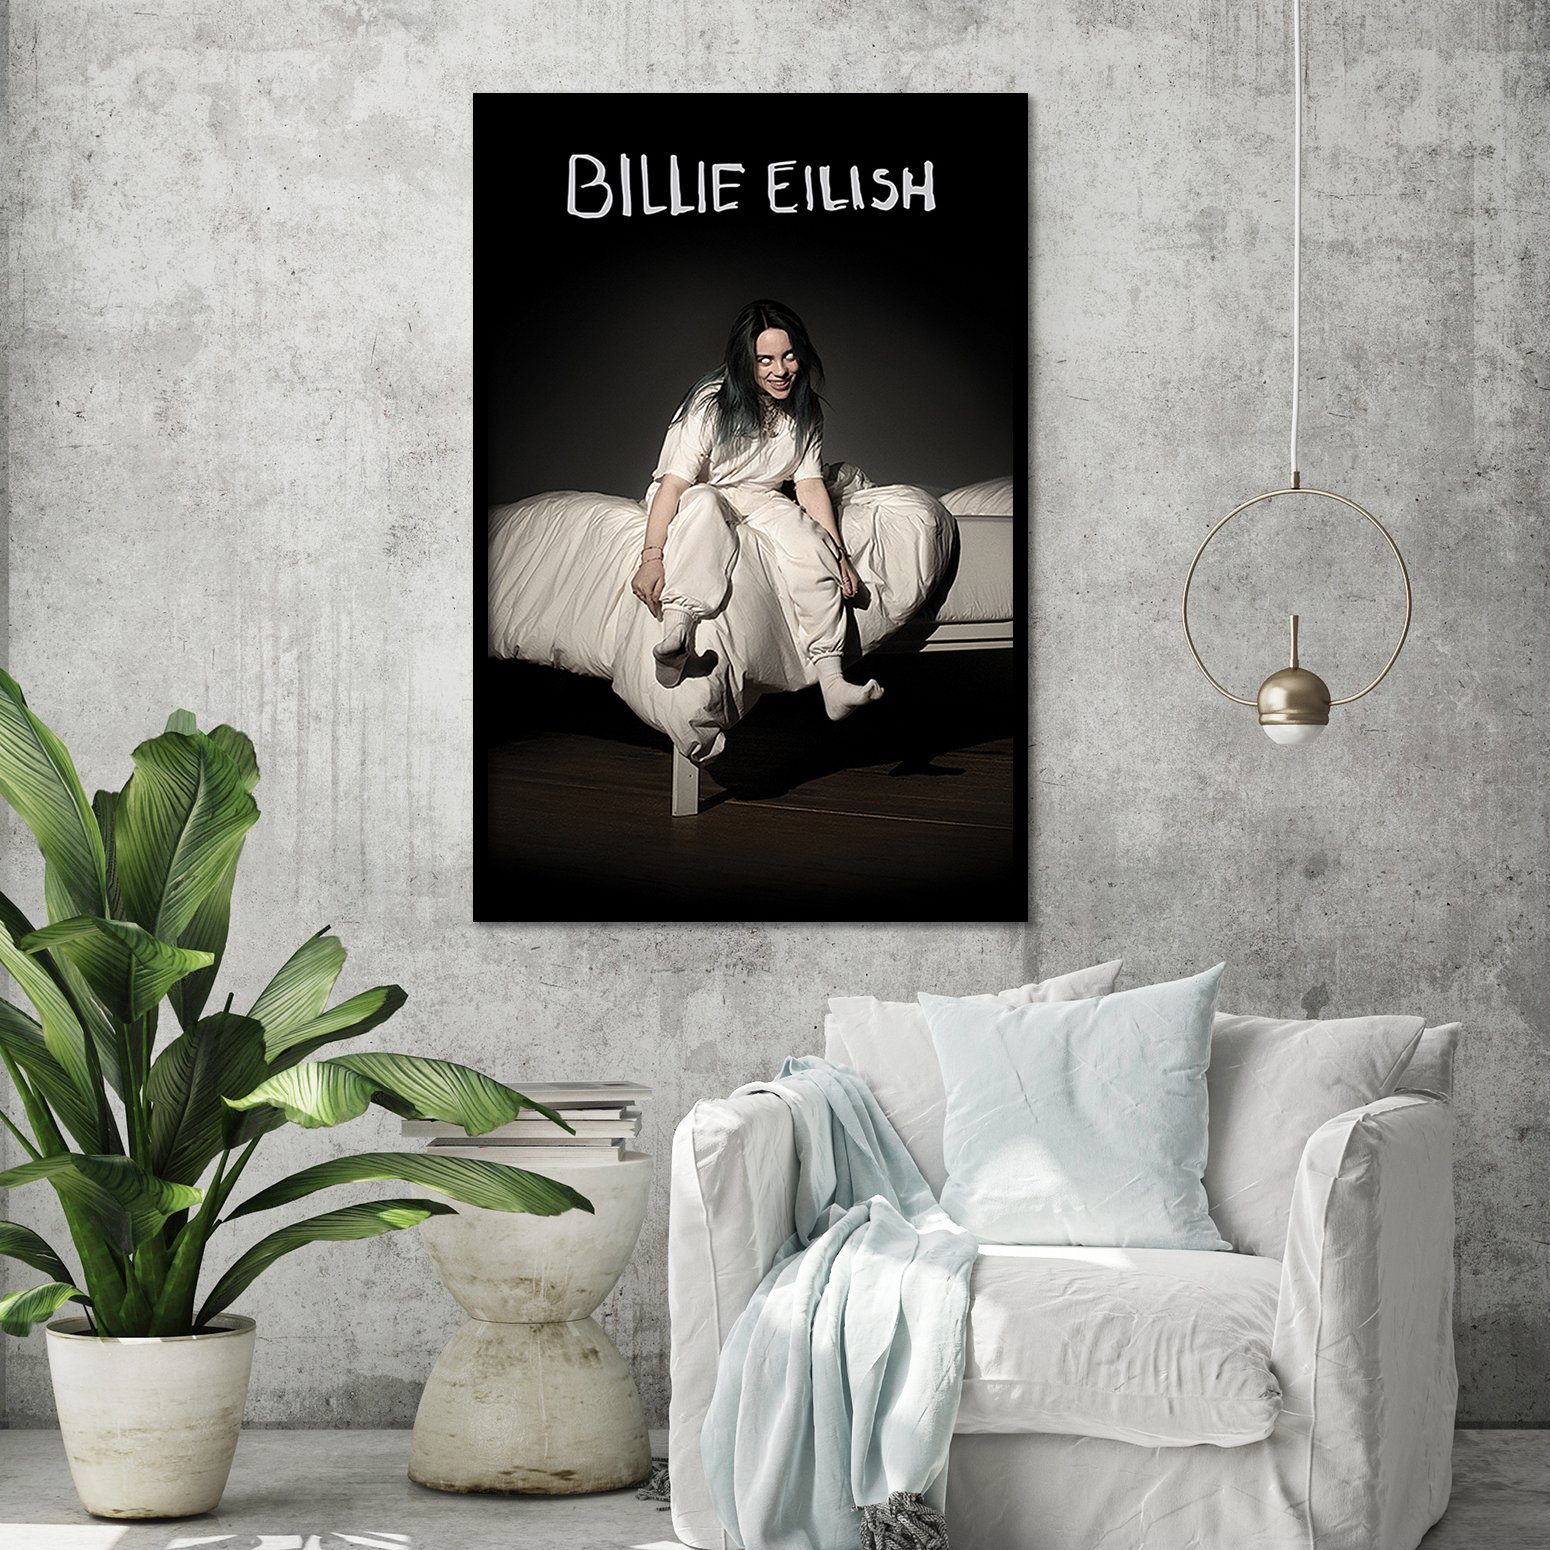 PYRAMID All Where Do When We Eilish Asleep Billie Go Poster We Poster Fall